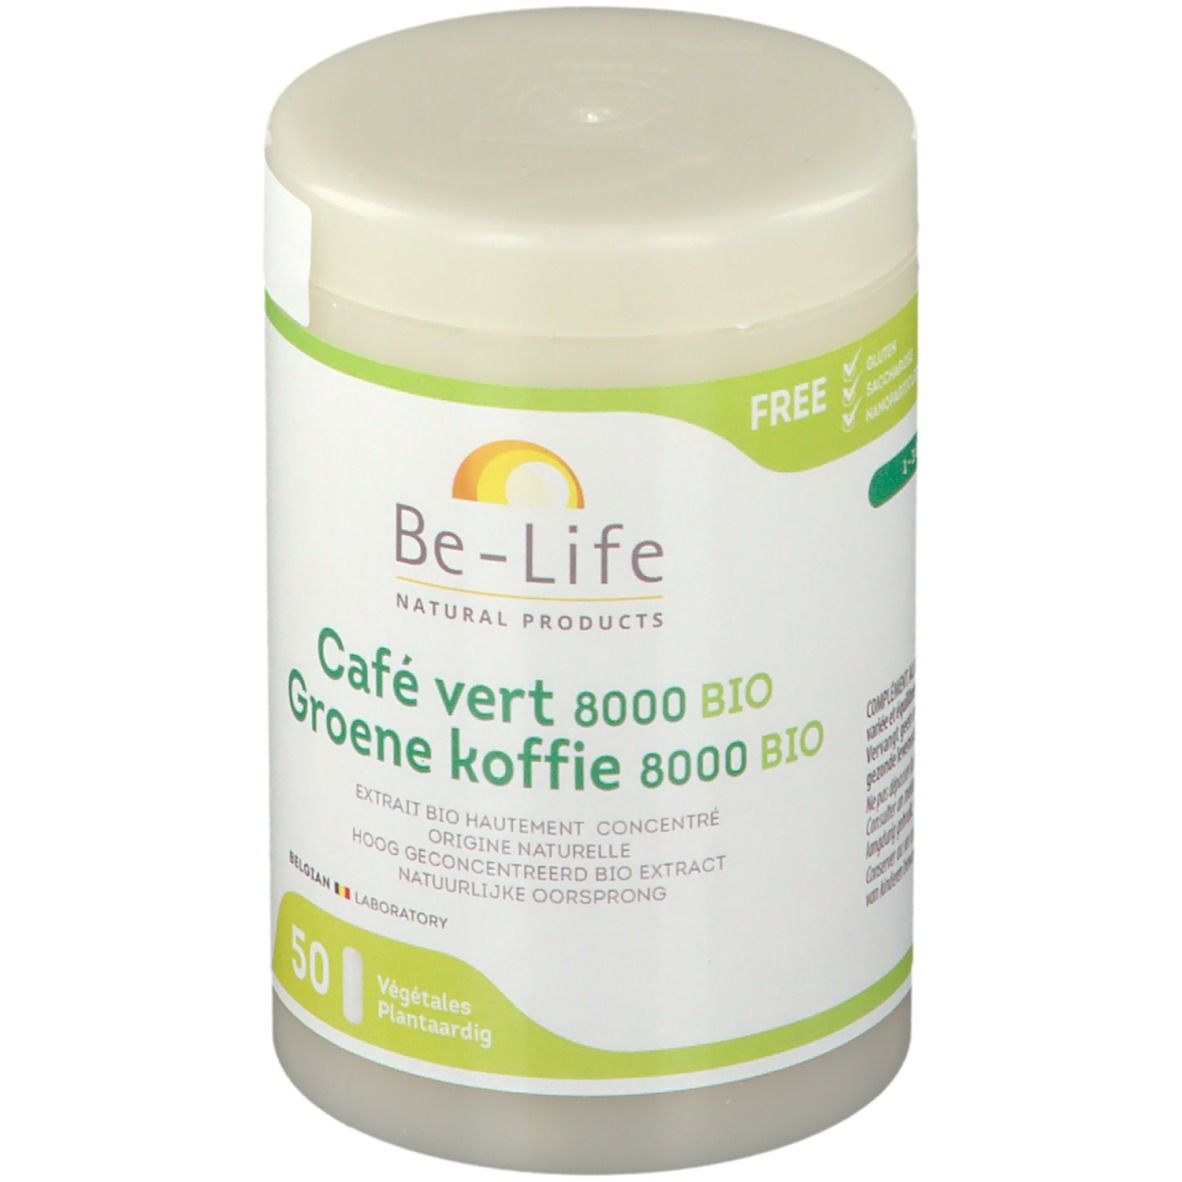 Be-Life Café Vert 8000 Bio